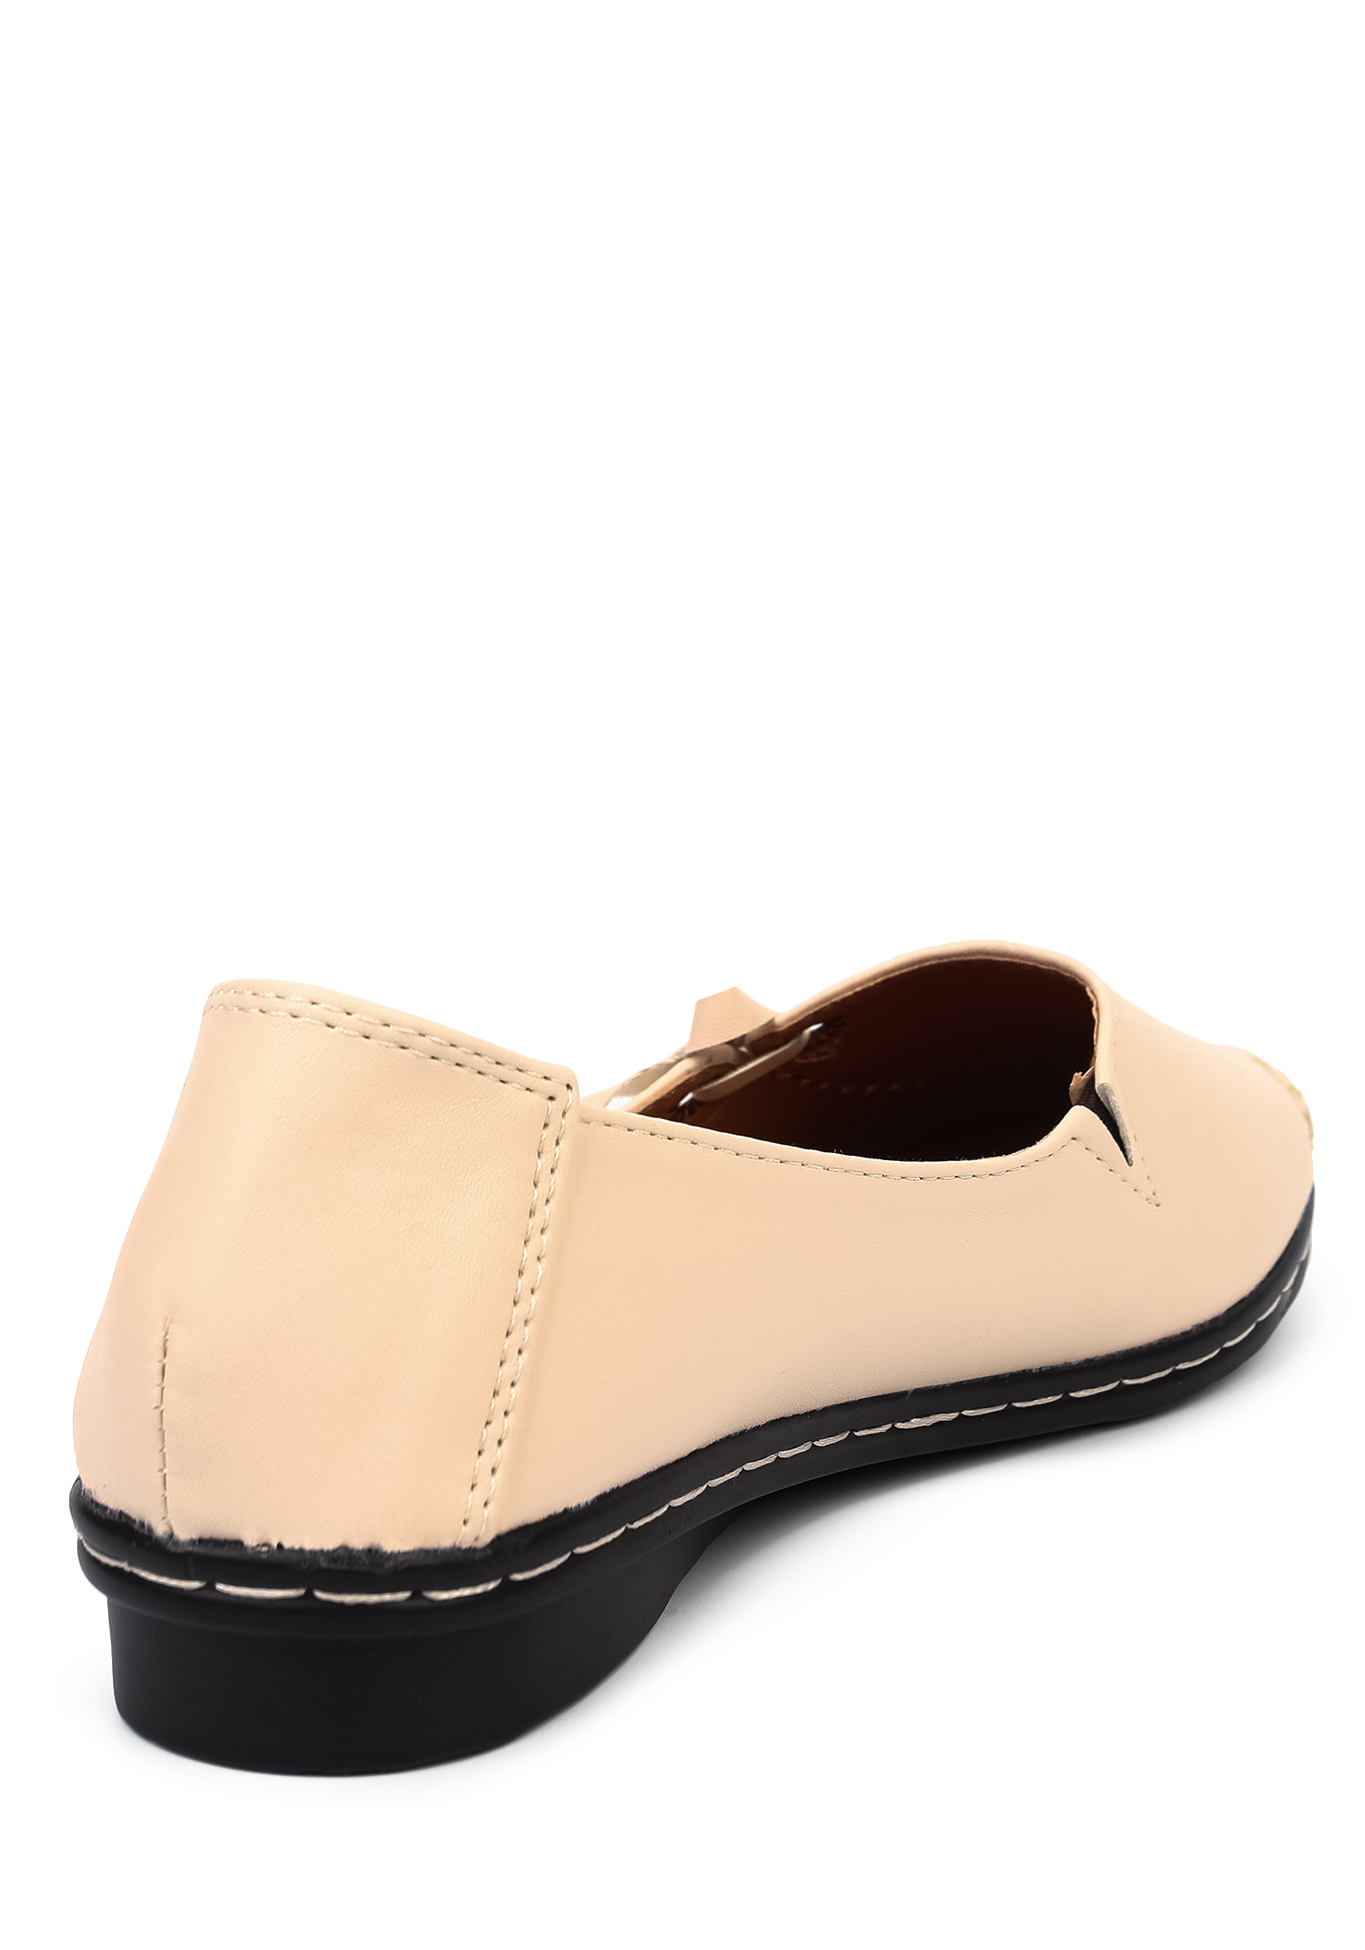 Туфли летние женские "Рикки" ANISA, размер 36, цвет бежевый - фото 3